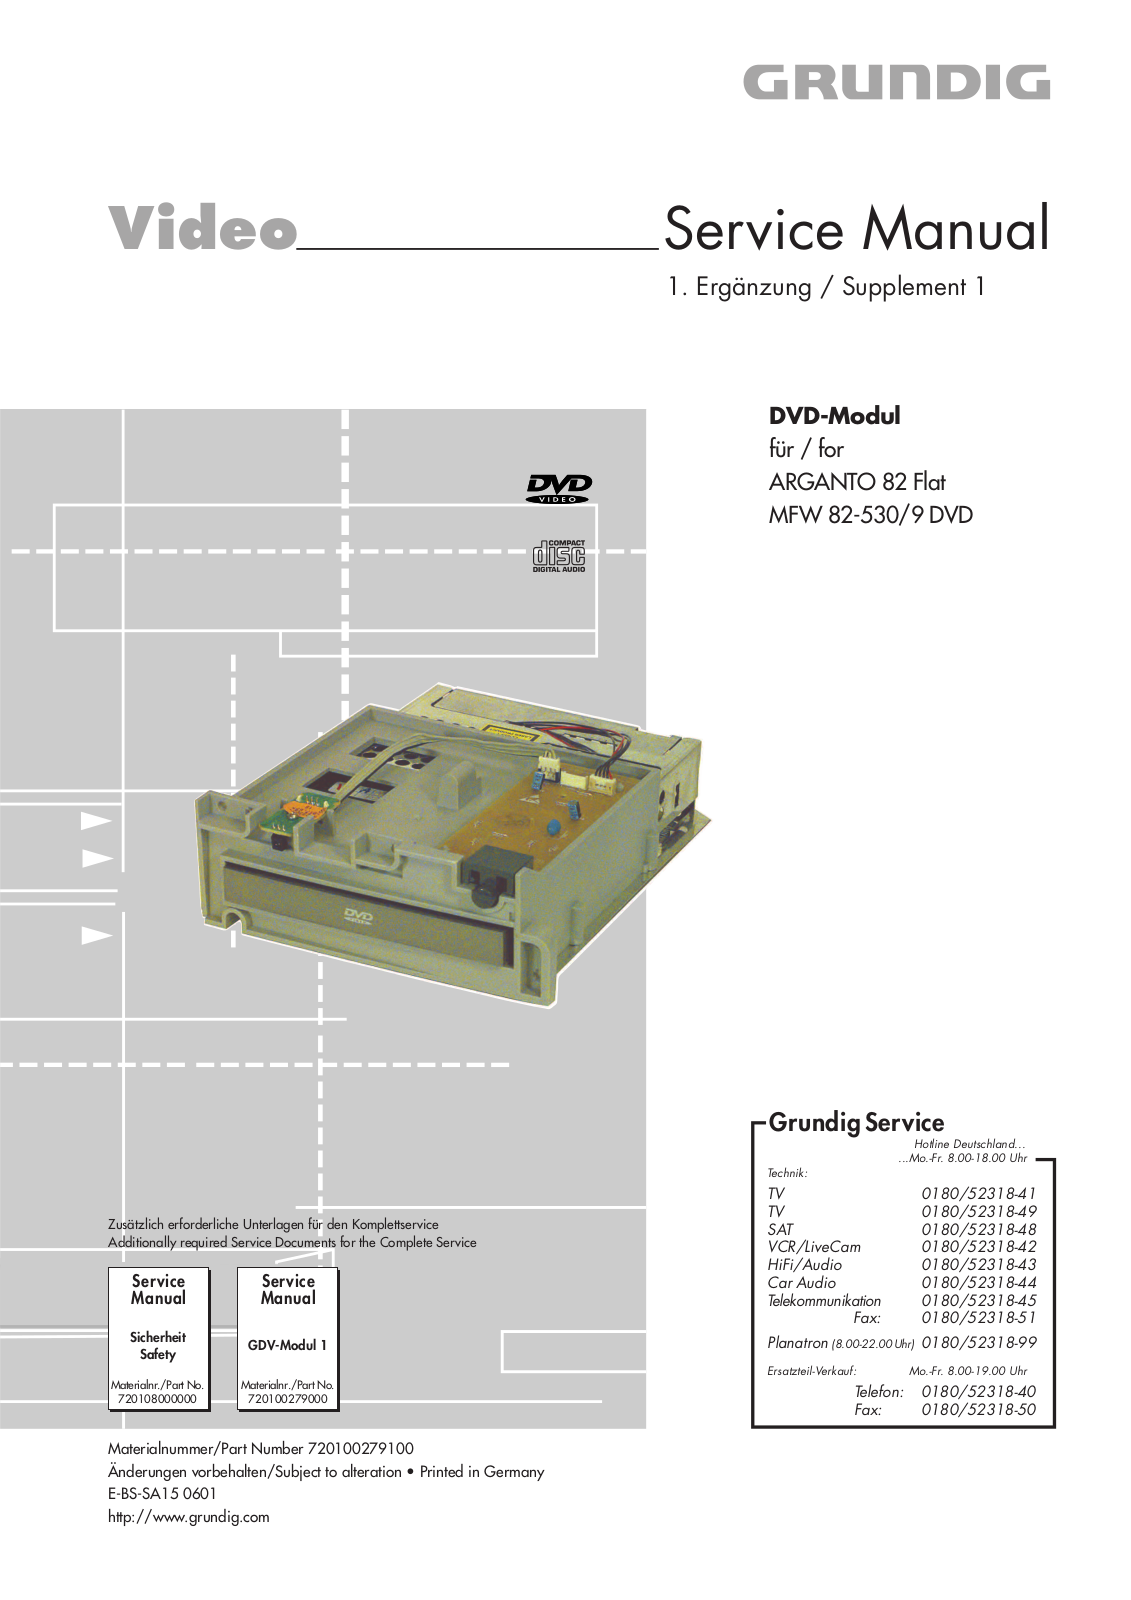 Grundig ARGANTO-82-FLAT, MFW-82-530-9-DVD Service Manual